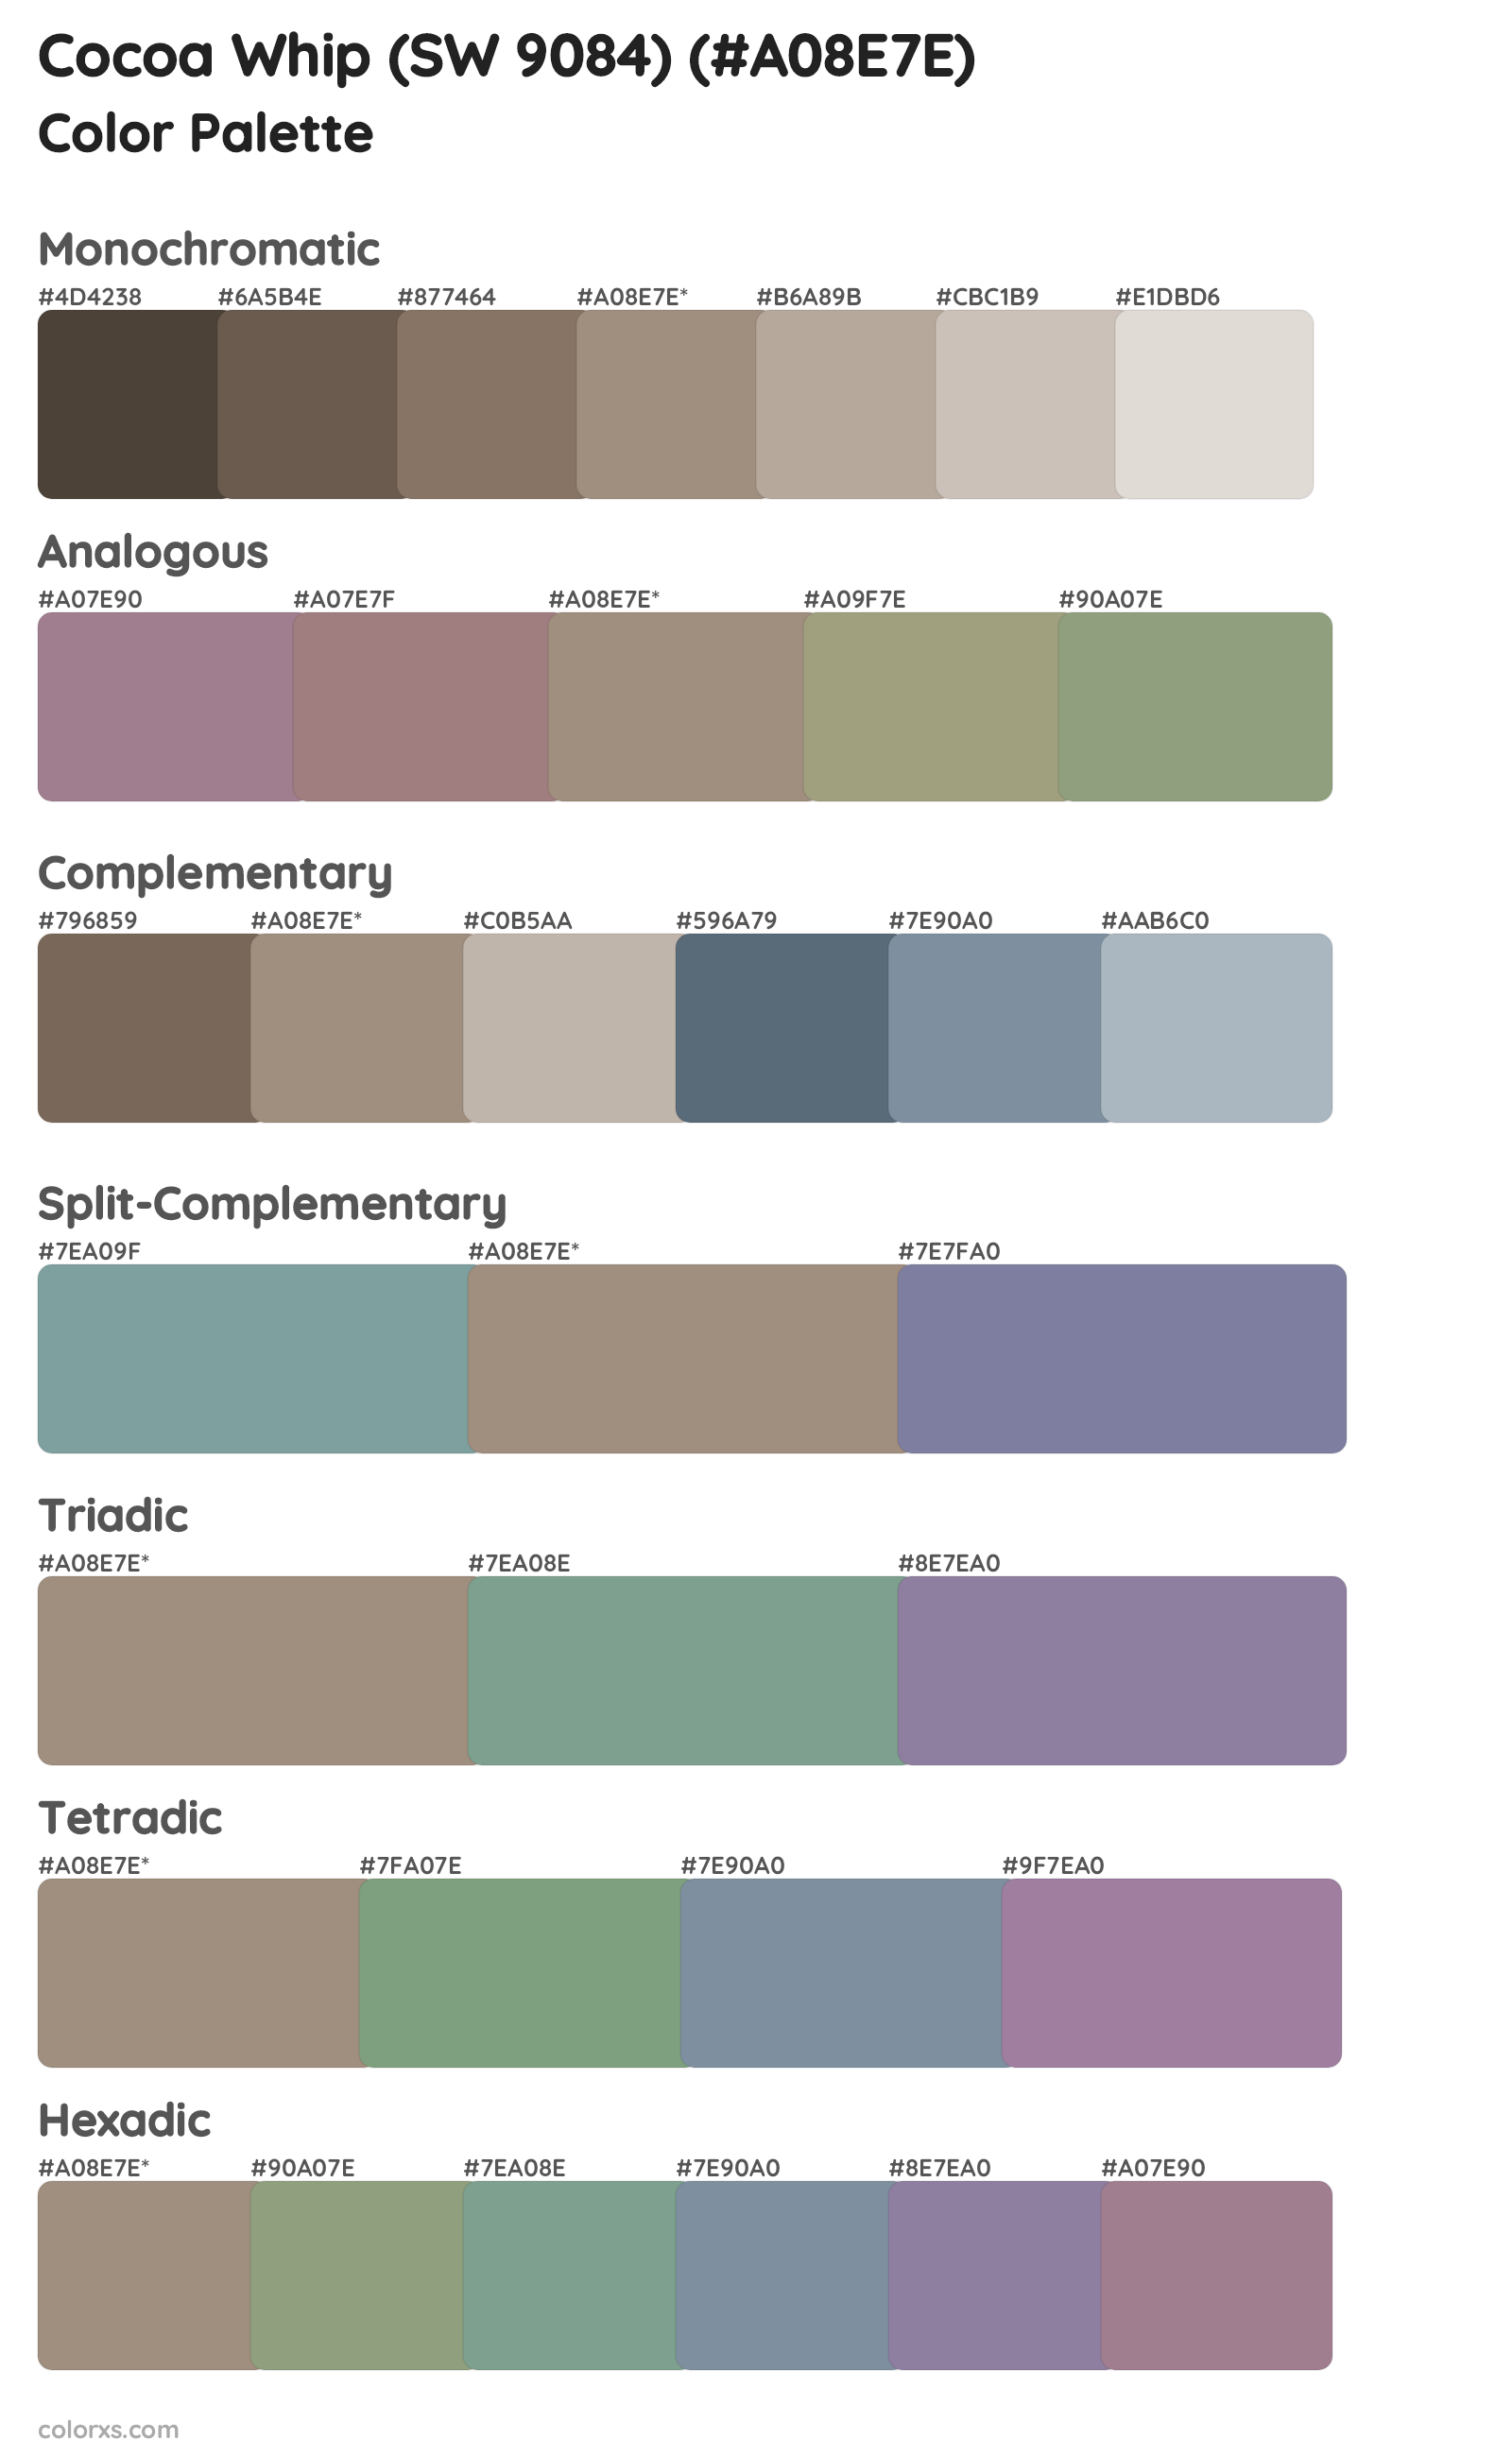 Cocoa Whip (SW 9084) Color Scheme Palettes